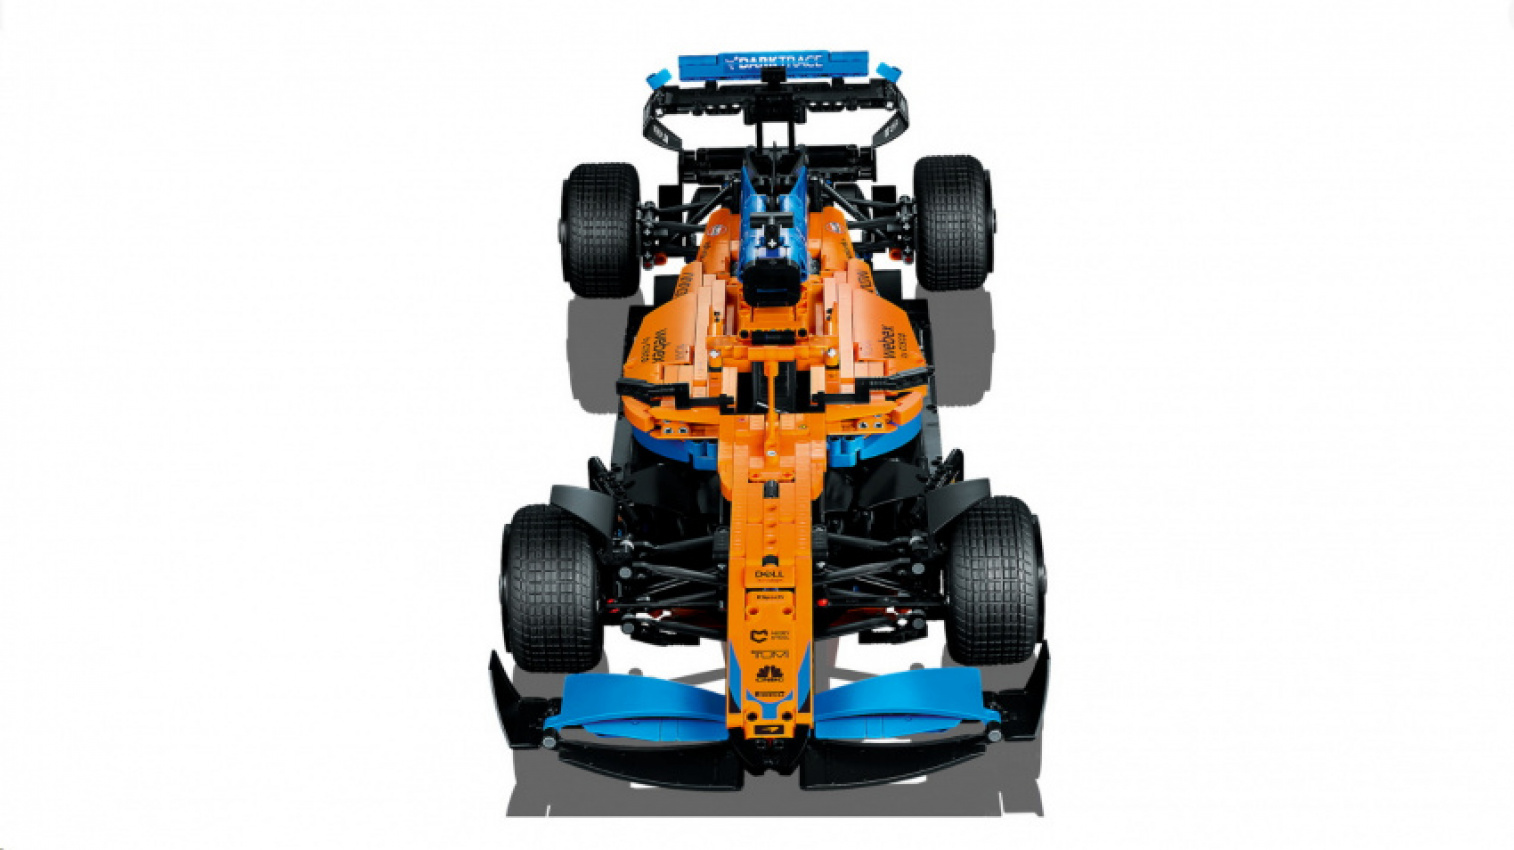 autos, cars, mclaren, news, lego, motorsports, lego unveils new 1,400-piece, 2ft long, $180 mclaren formula 1 car kit